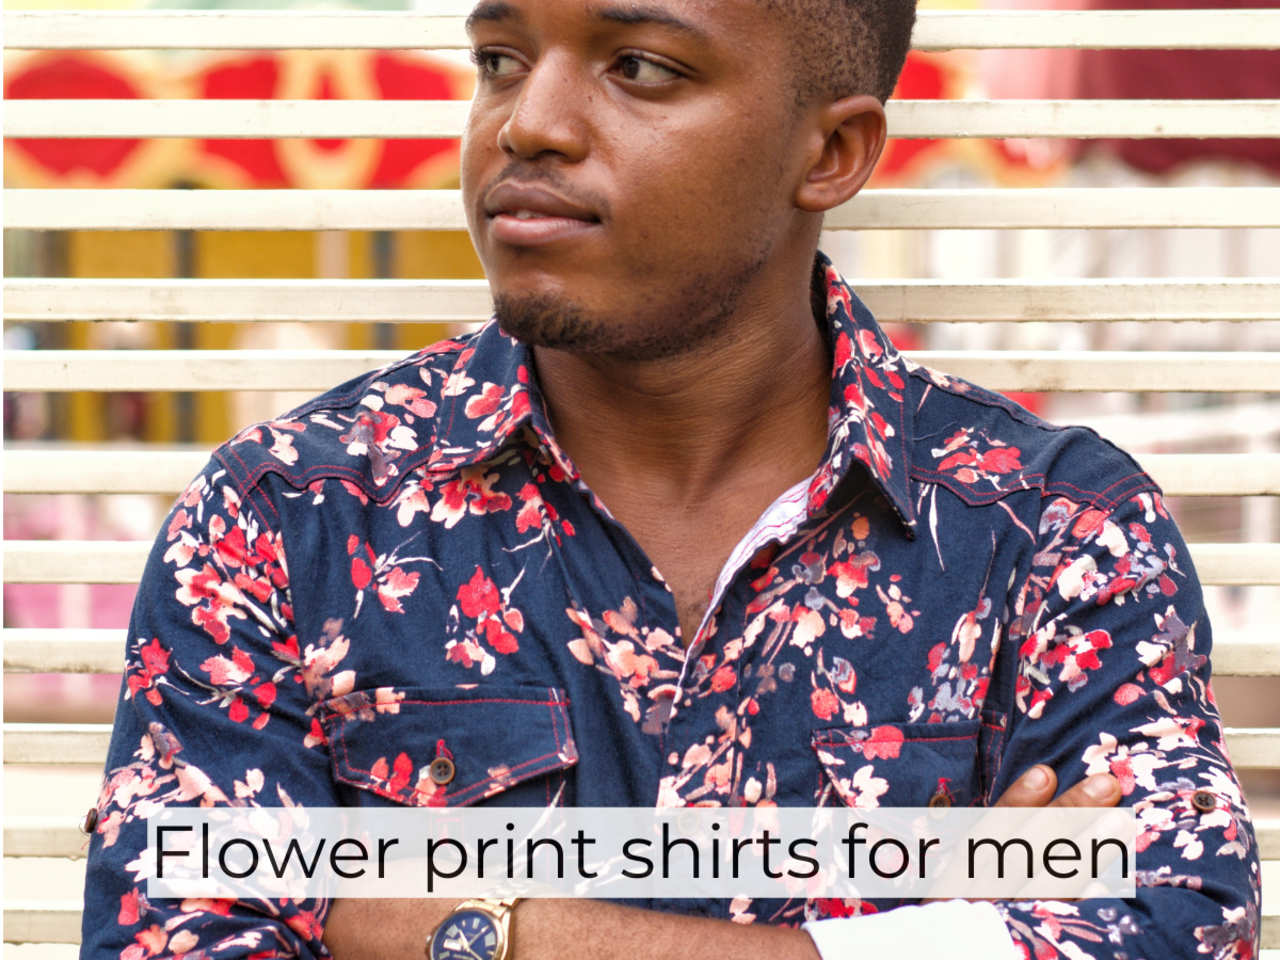 viovi Simple Flower Design T-Shirt